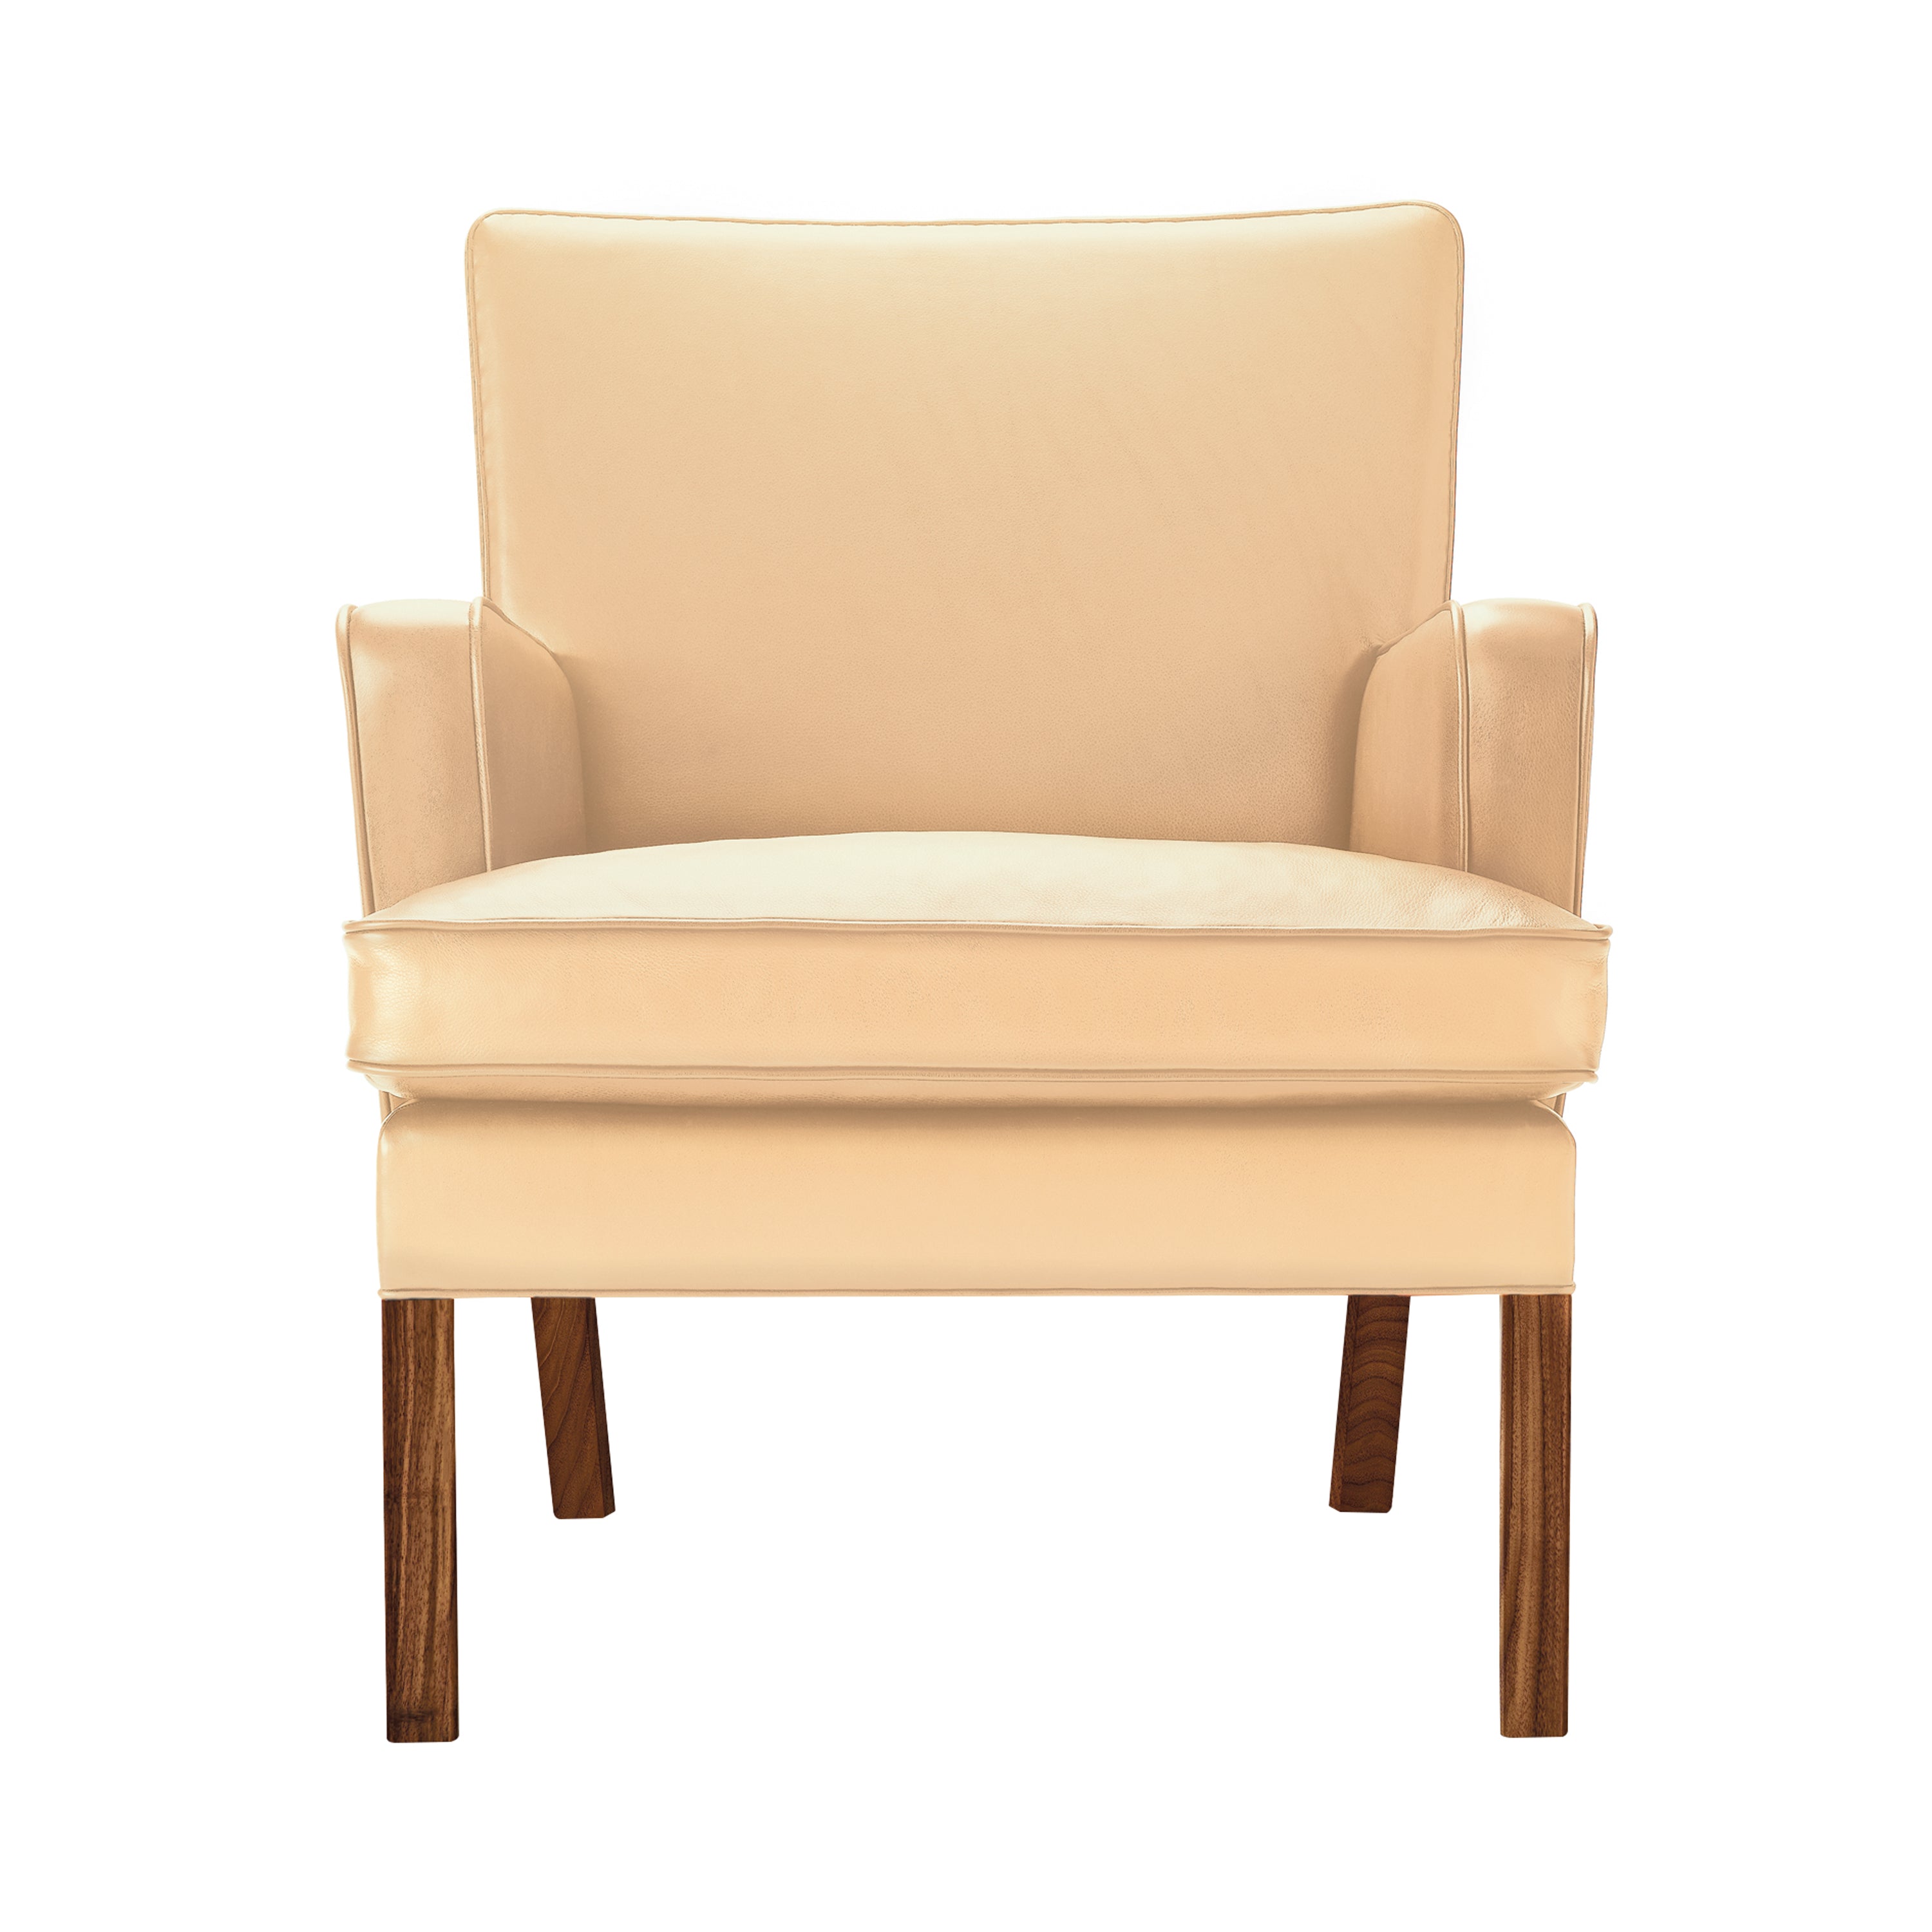 KK53130 Easy Chair: Oiled Walnut